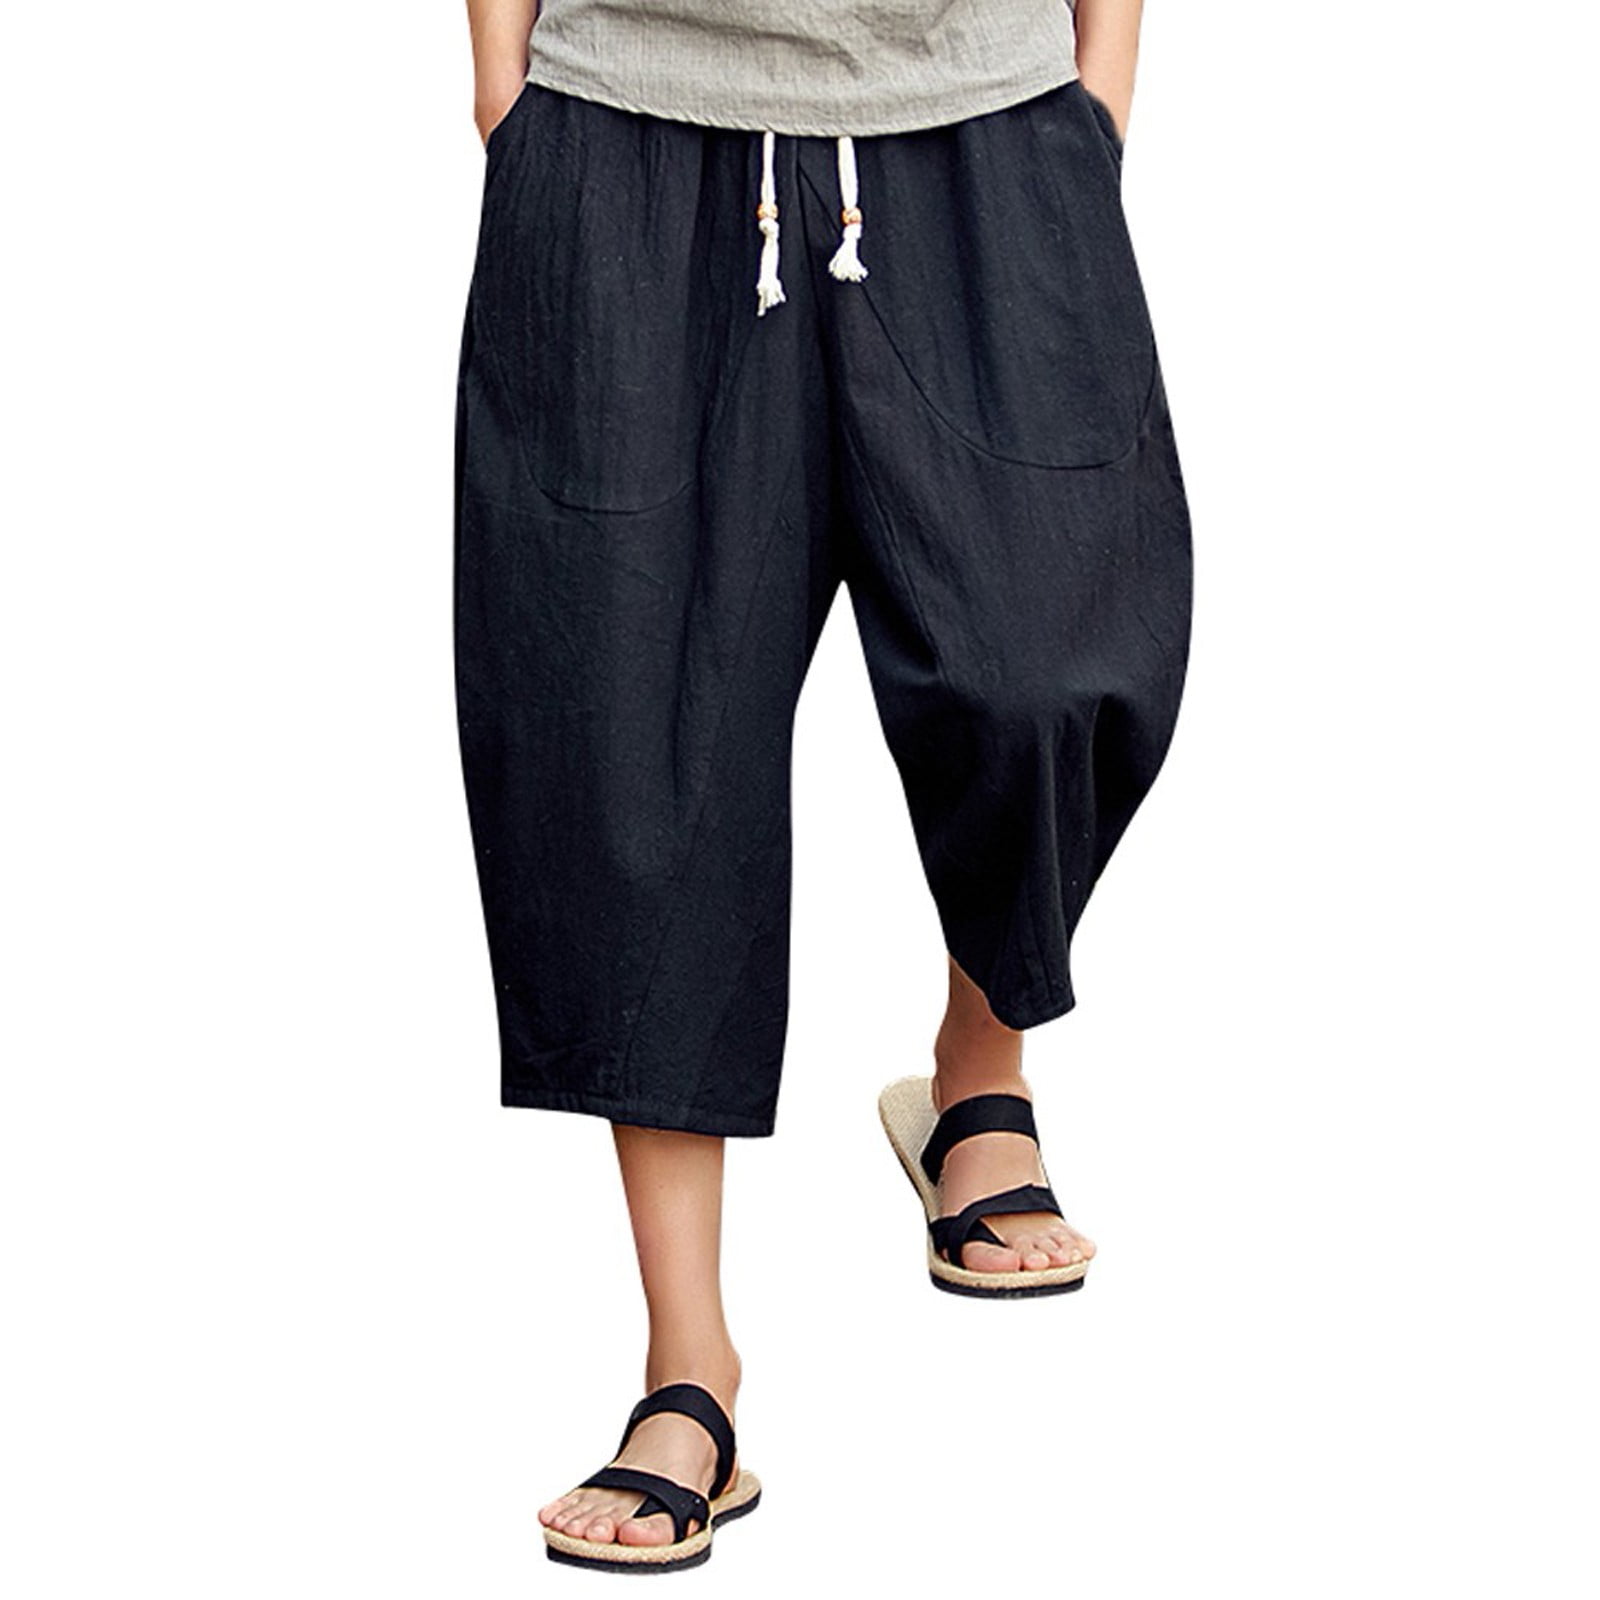 Men's Casual Slim Sports Pants Calf-Length Linen Trousers Baggy Harem Pants 